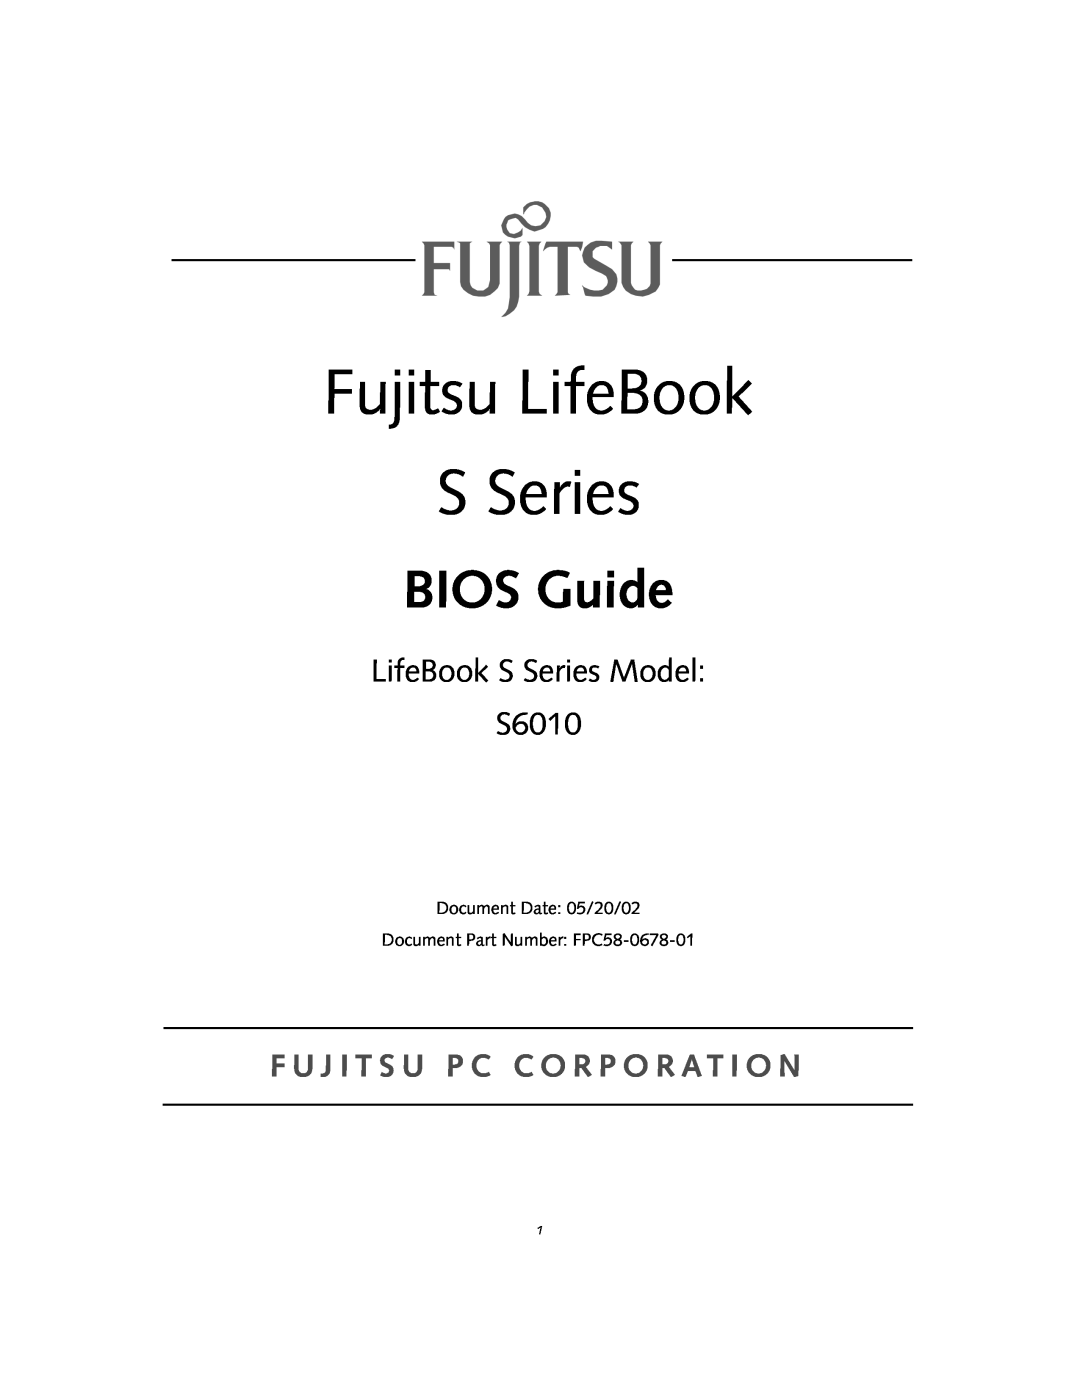 Fujitsu Siemens Computers manual Fujitsu LifeBook S Series, BIOS Guide, LifeBook S Series Model S6010 